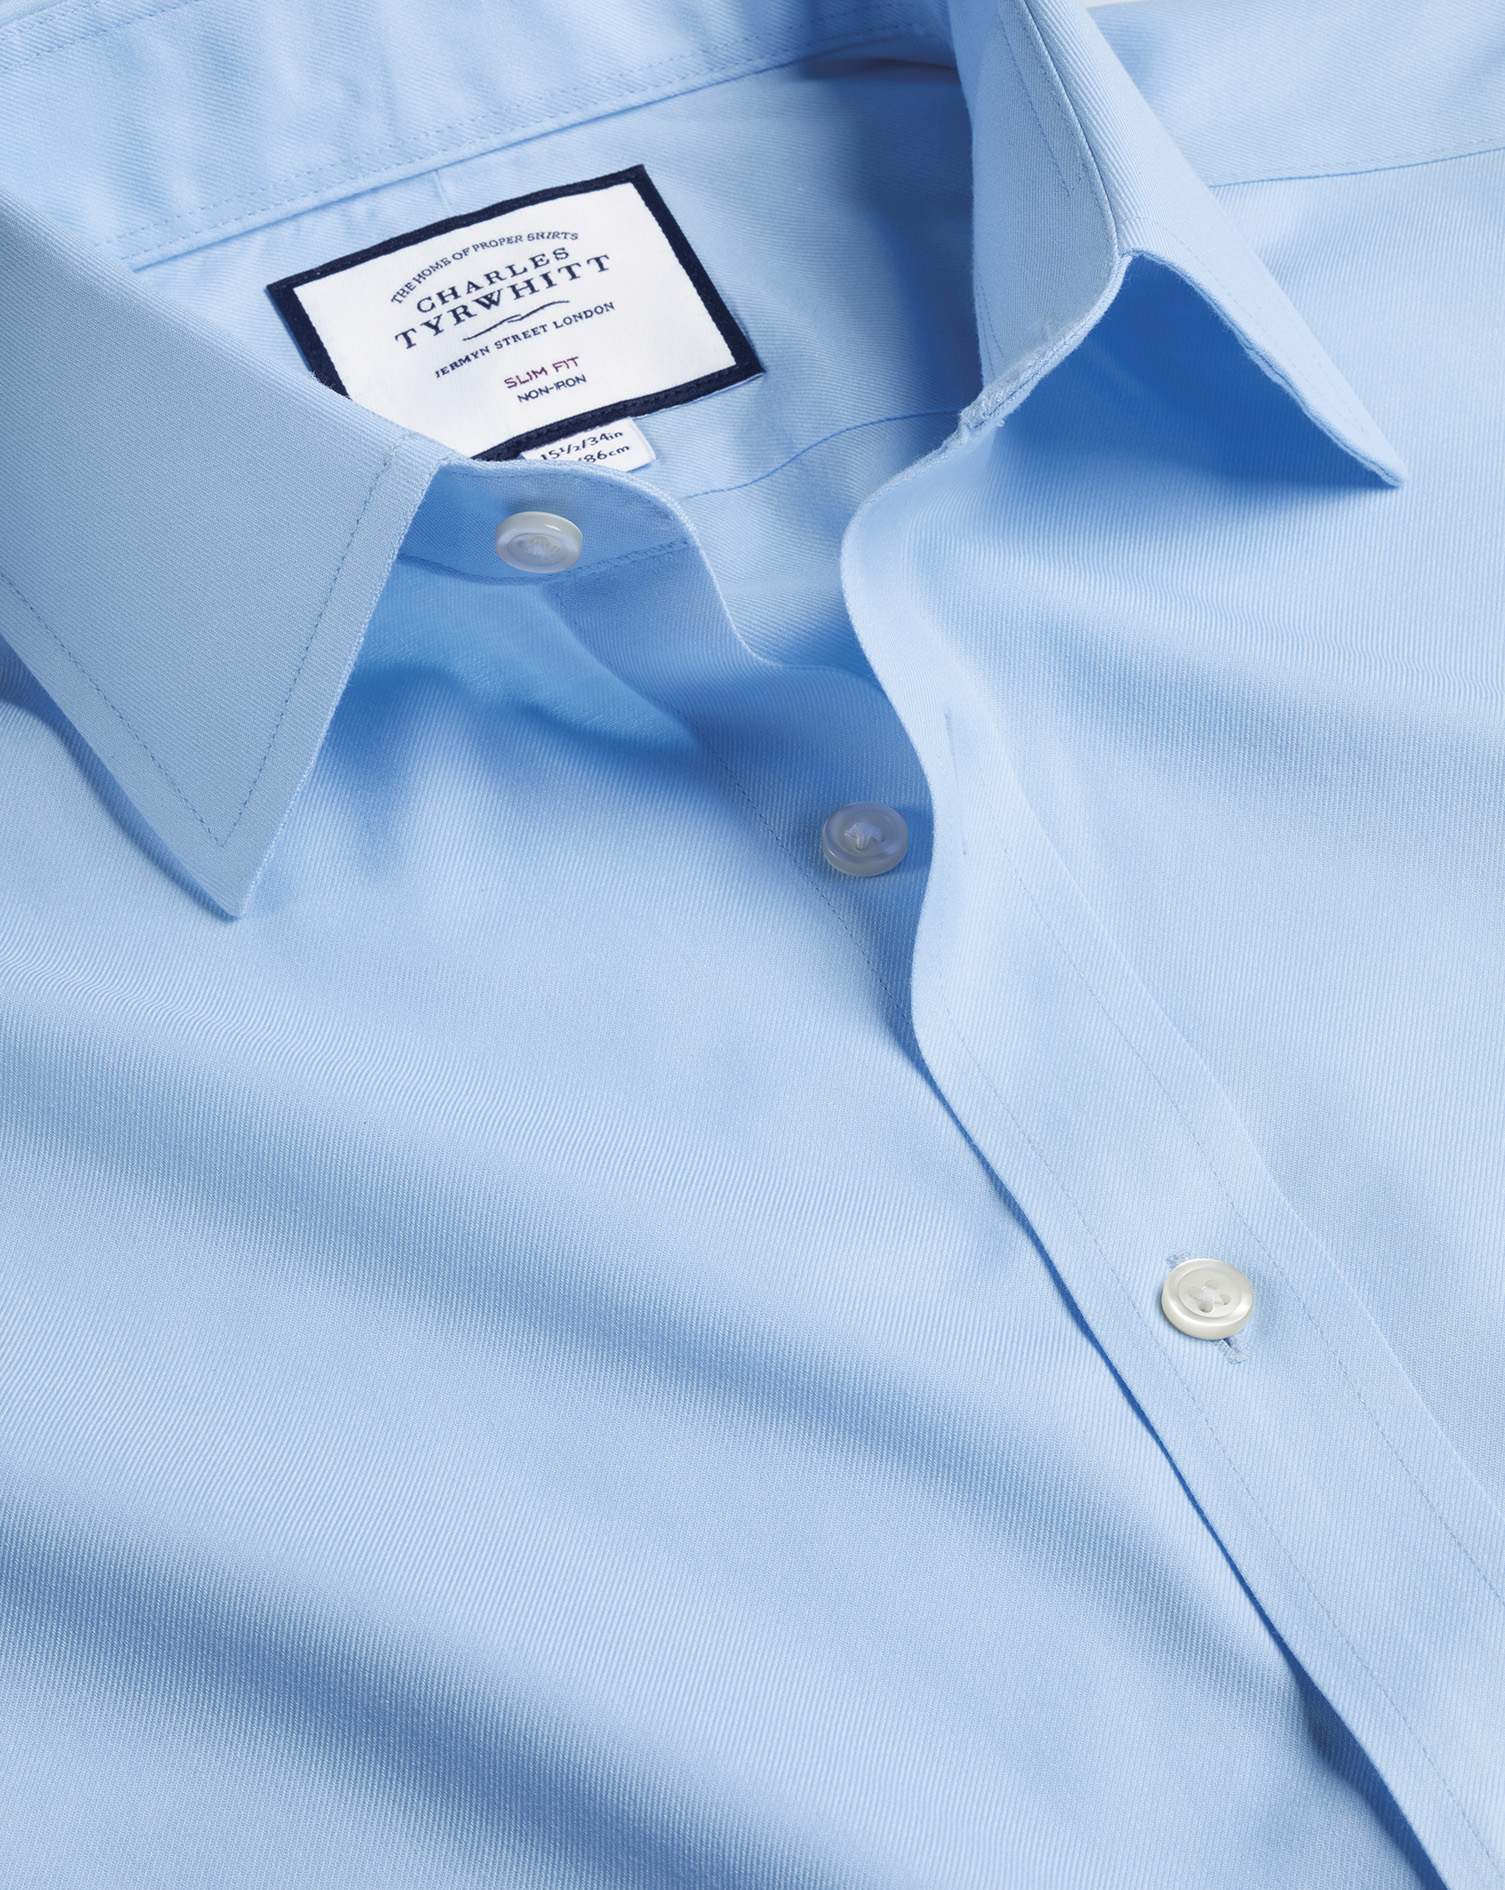 Men's Charles Tyrwhitt Non-Iron Twill Dress Shirt - Sky Blue French Cuff Size Medium Cotton
